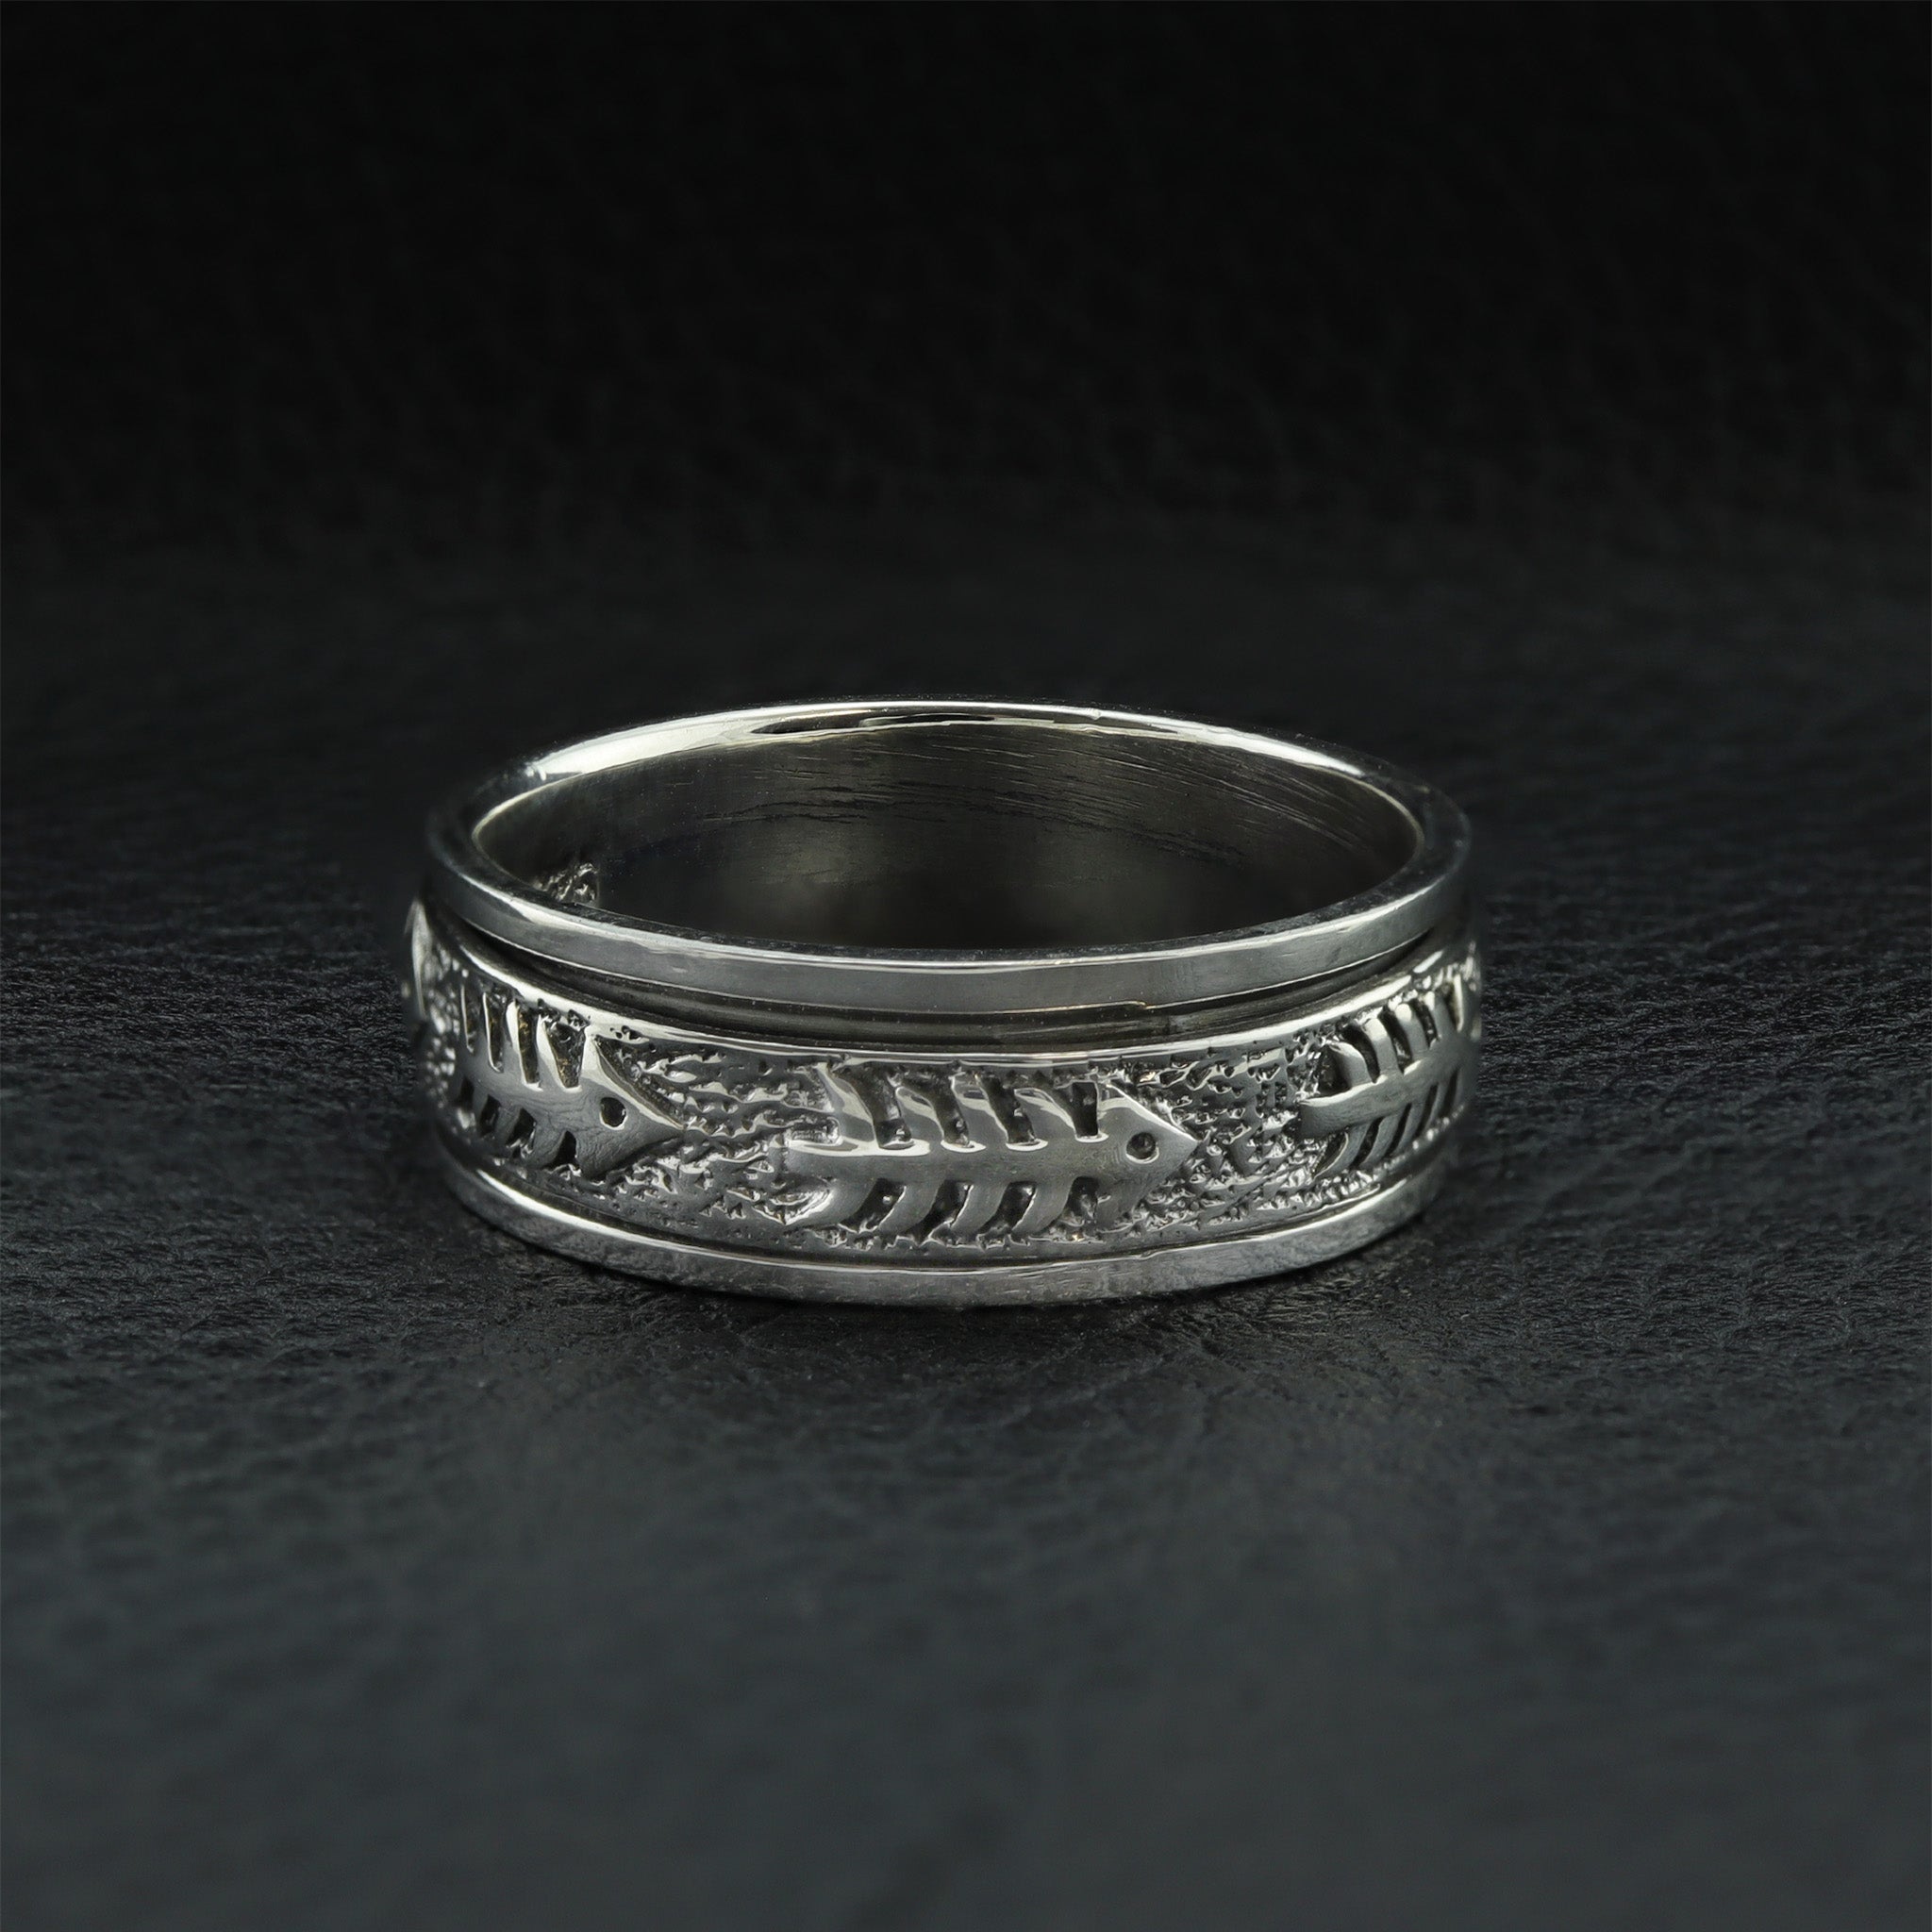 ssr254 ring blanks 925 sterling silver